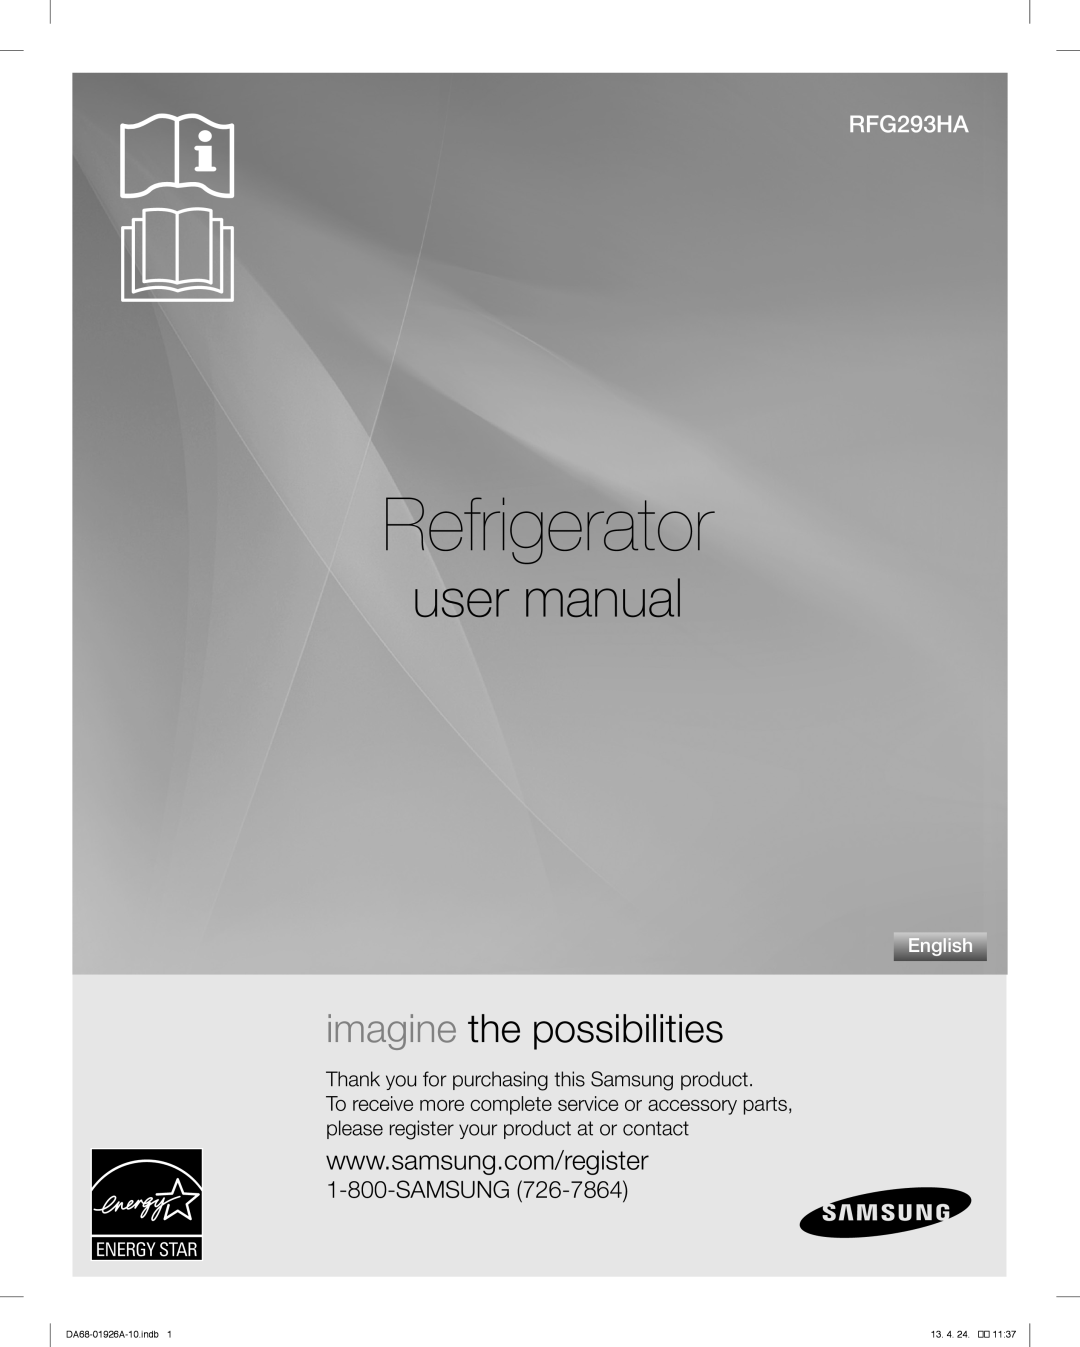 Samsung RFG293HAWP user manual Refrigerator, TroubleshootingRFG293HA, imagine the possibilities, Samsung, English, 13. 4 